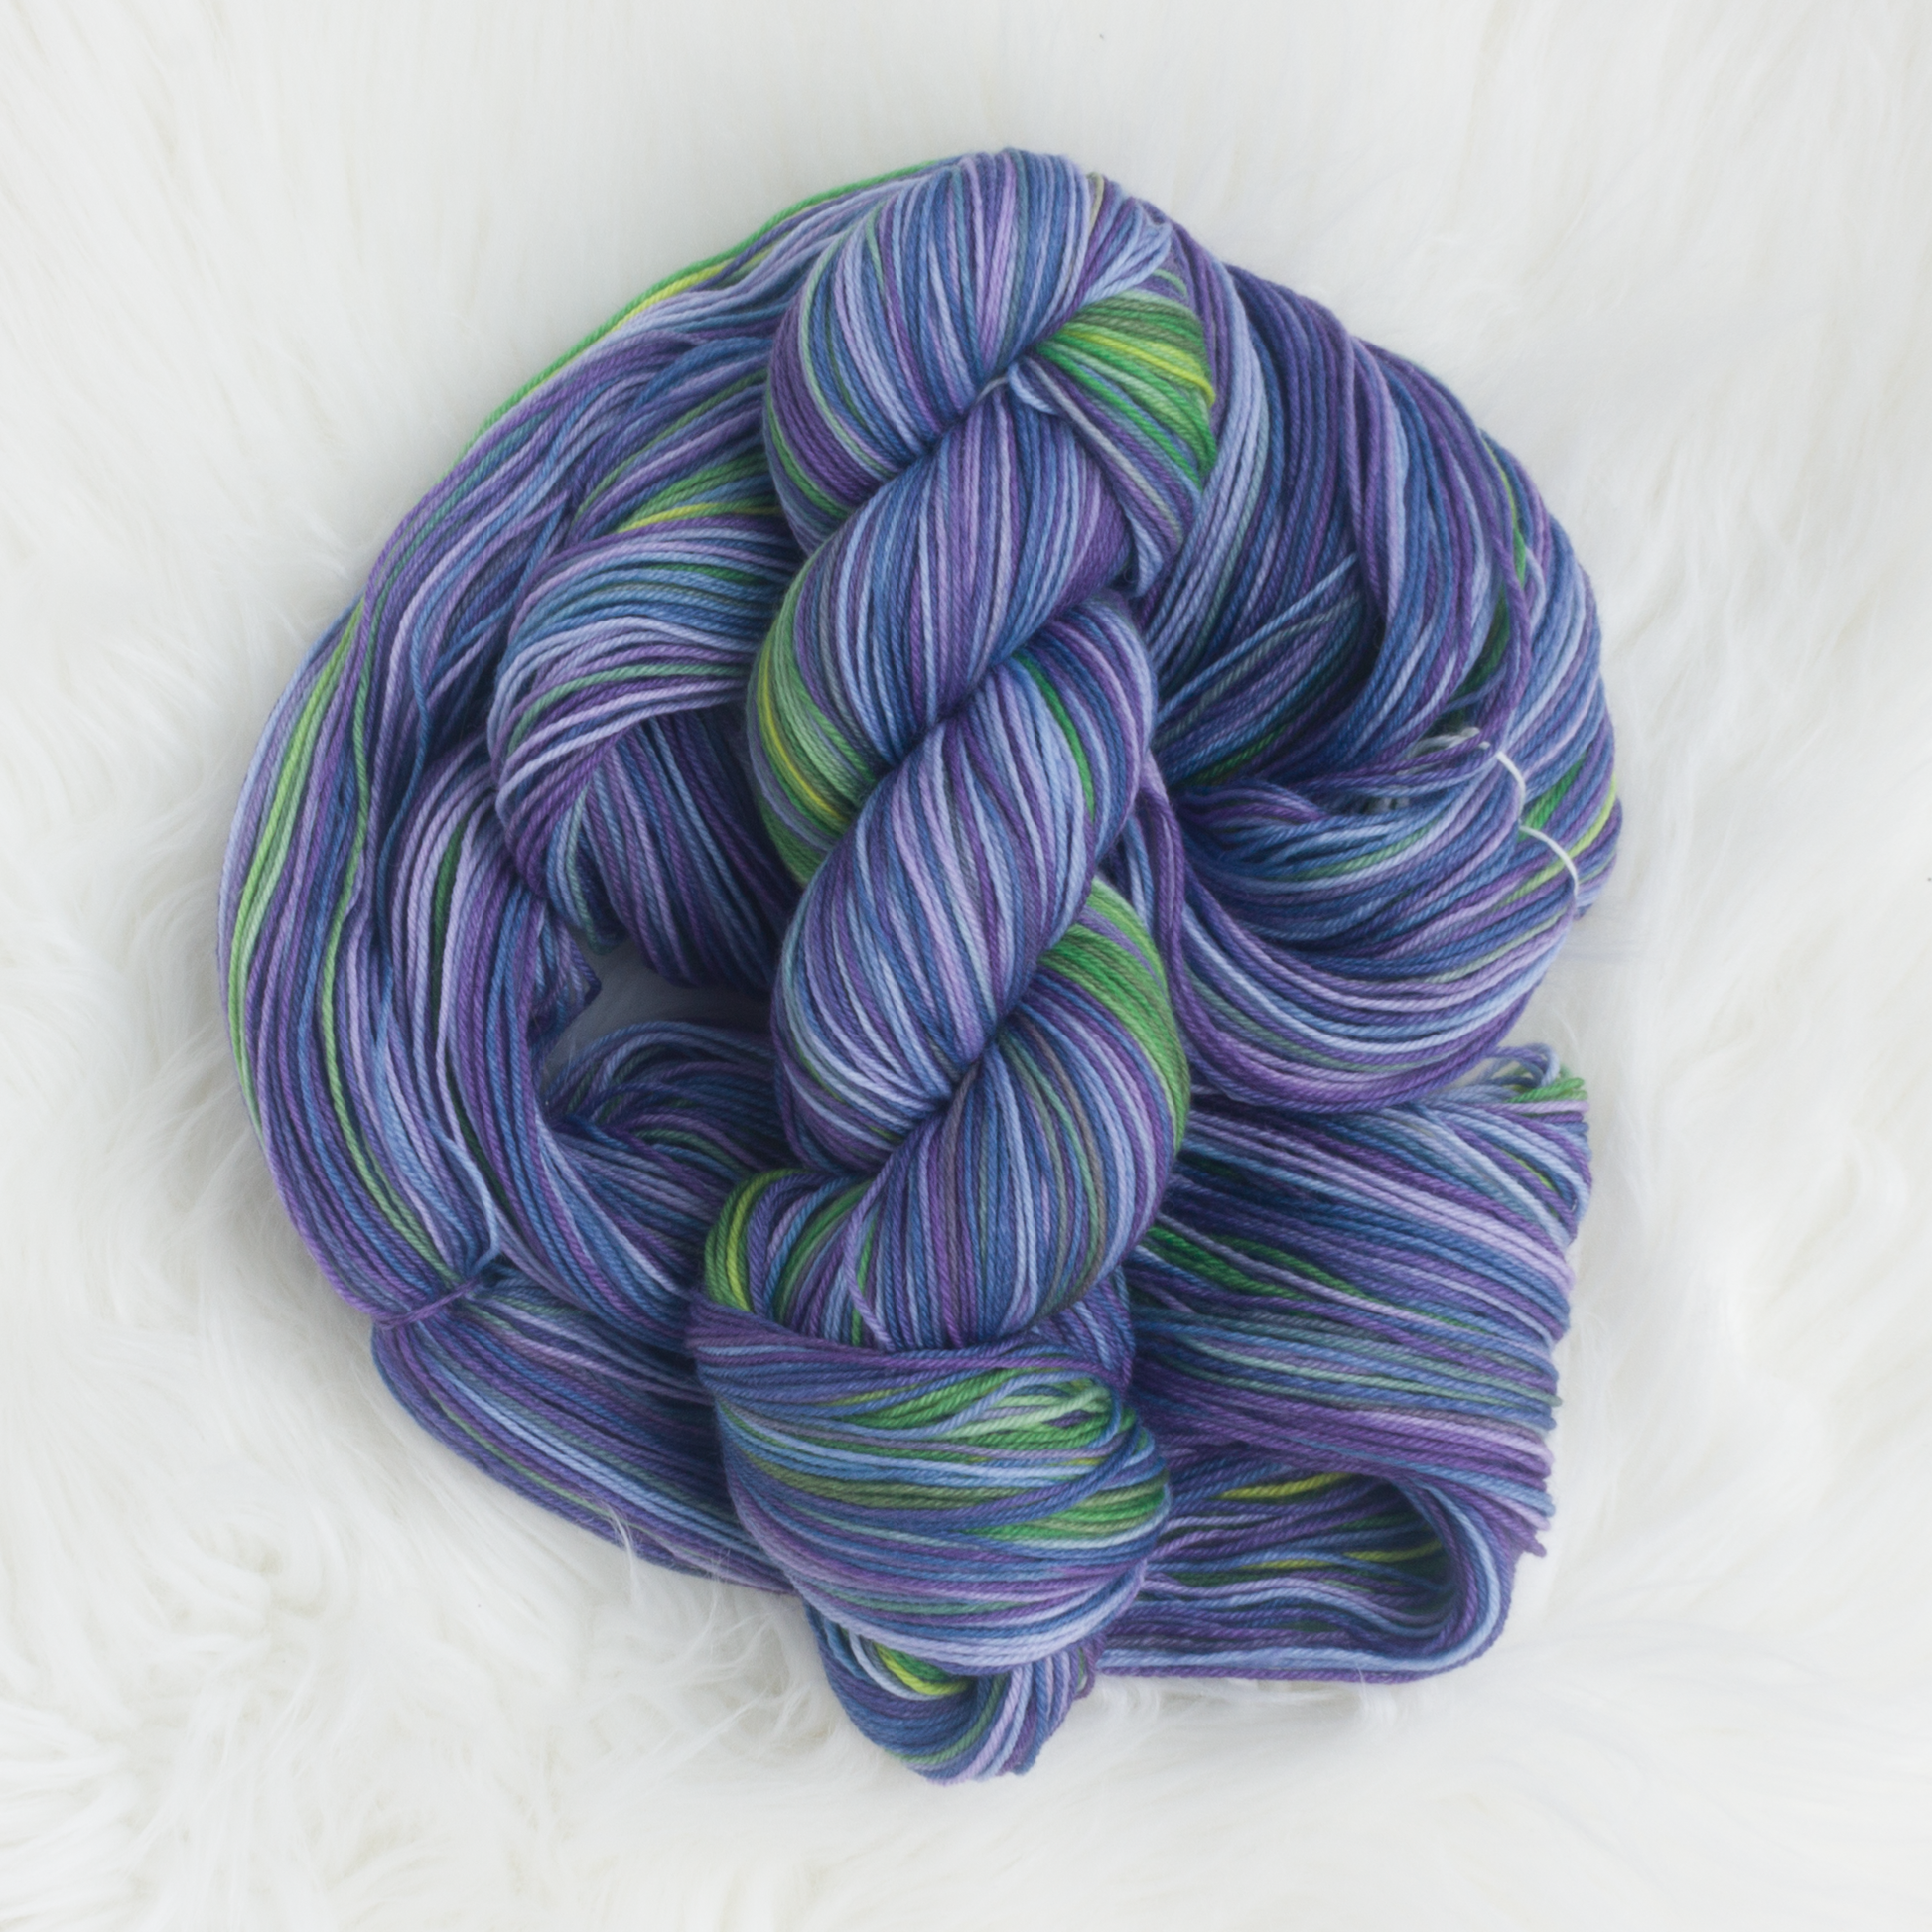 Violets February birth month sock yarn gauge dye works knitting crochet